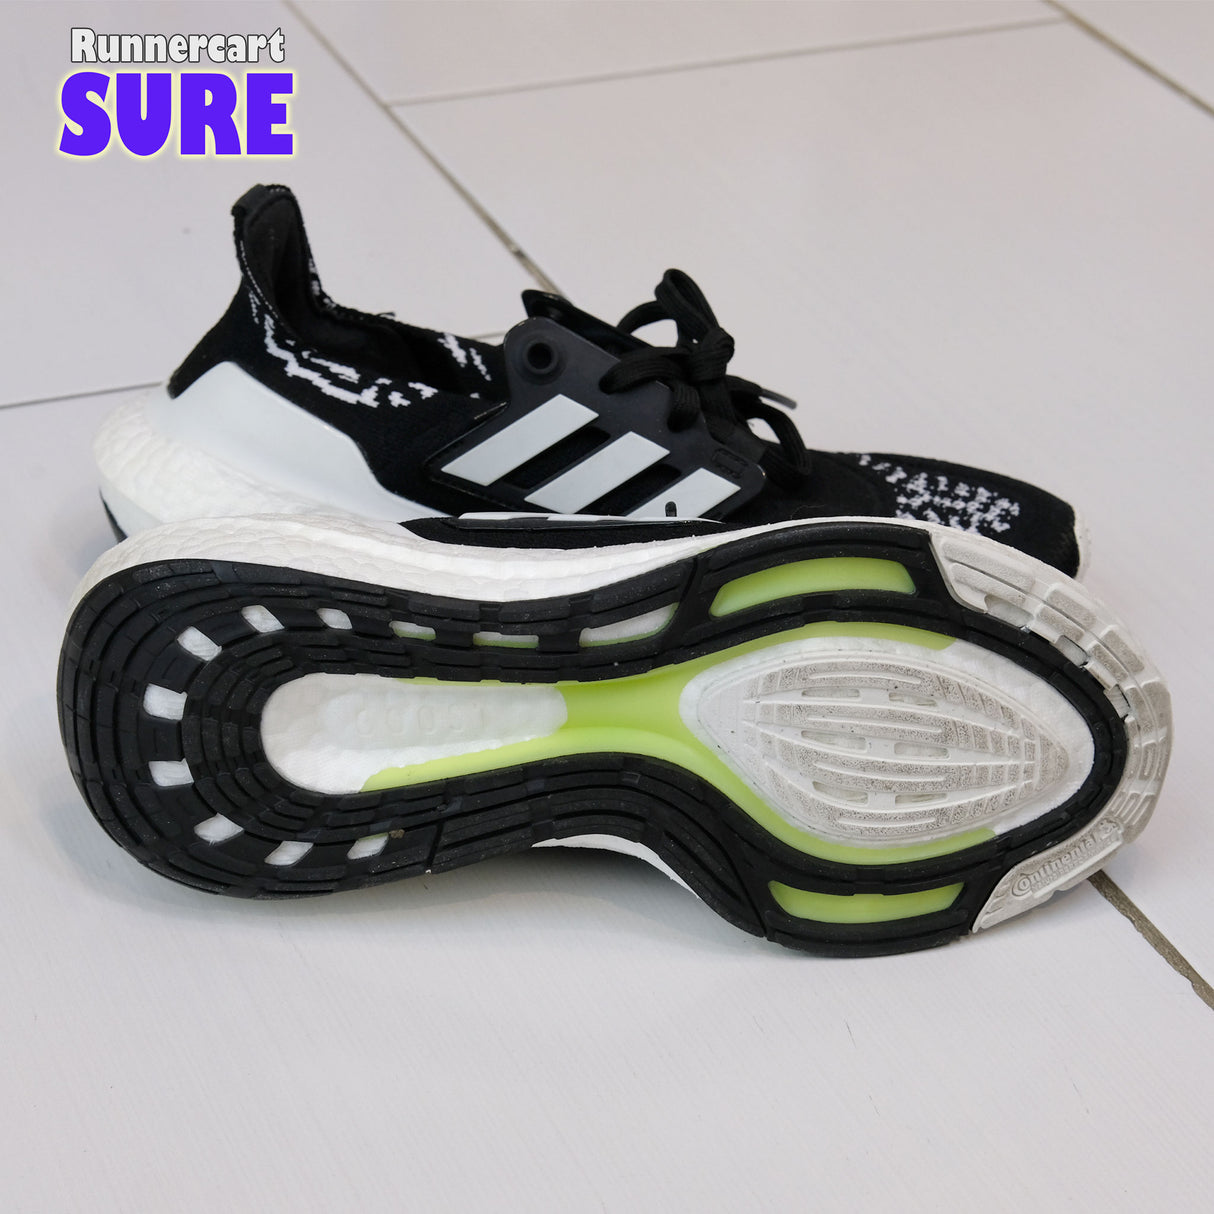 Sure_Adidas Women Ultraboost 23(Black), Size 7.5US (no box)